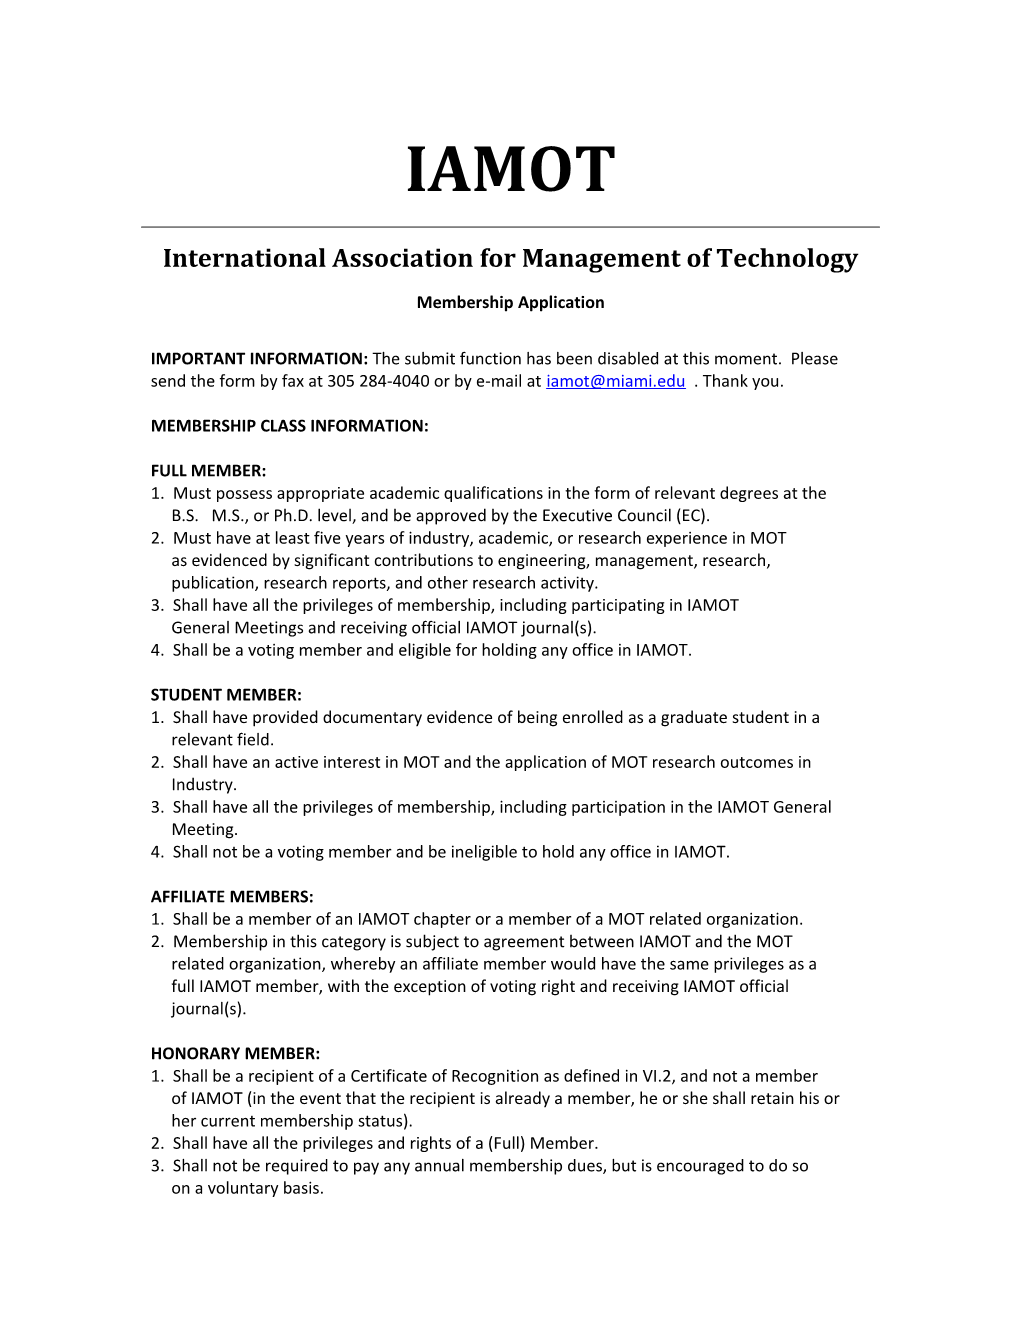 IAMOT Membership Application